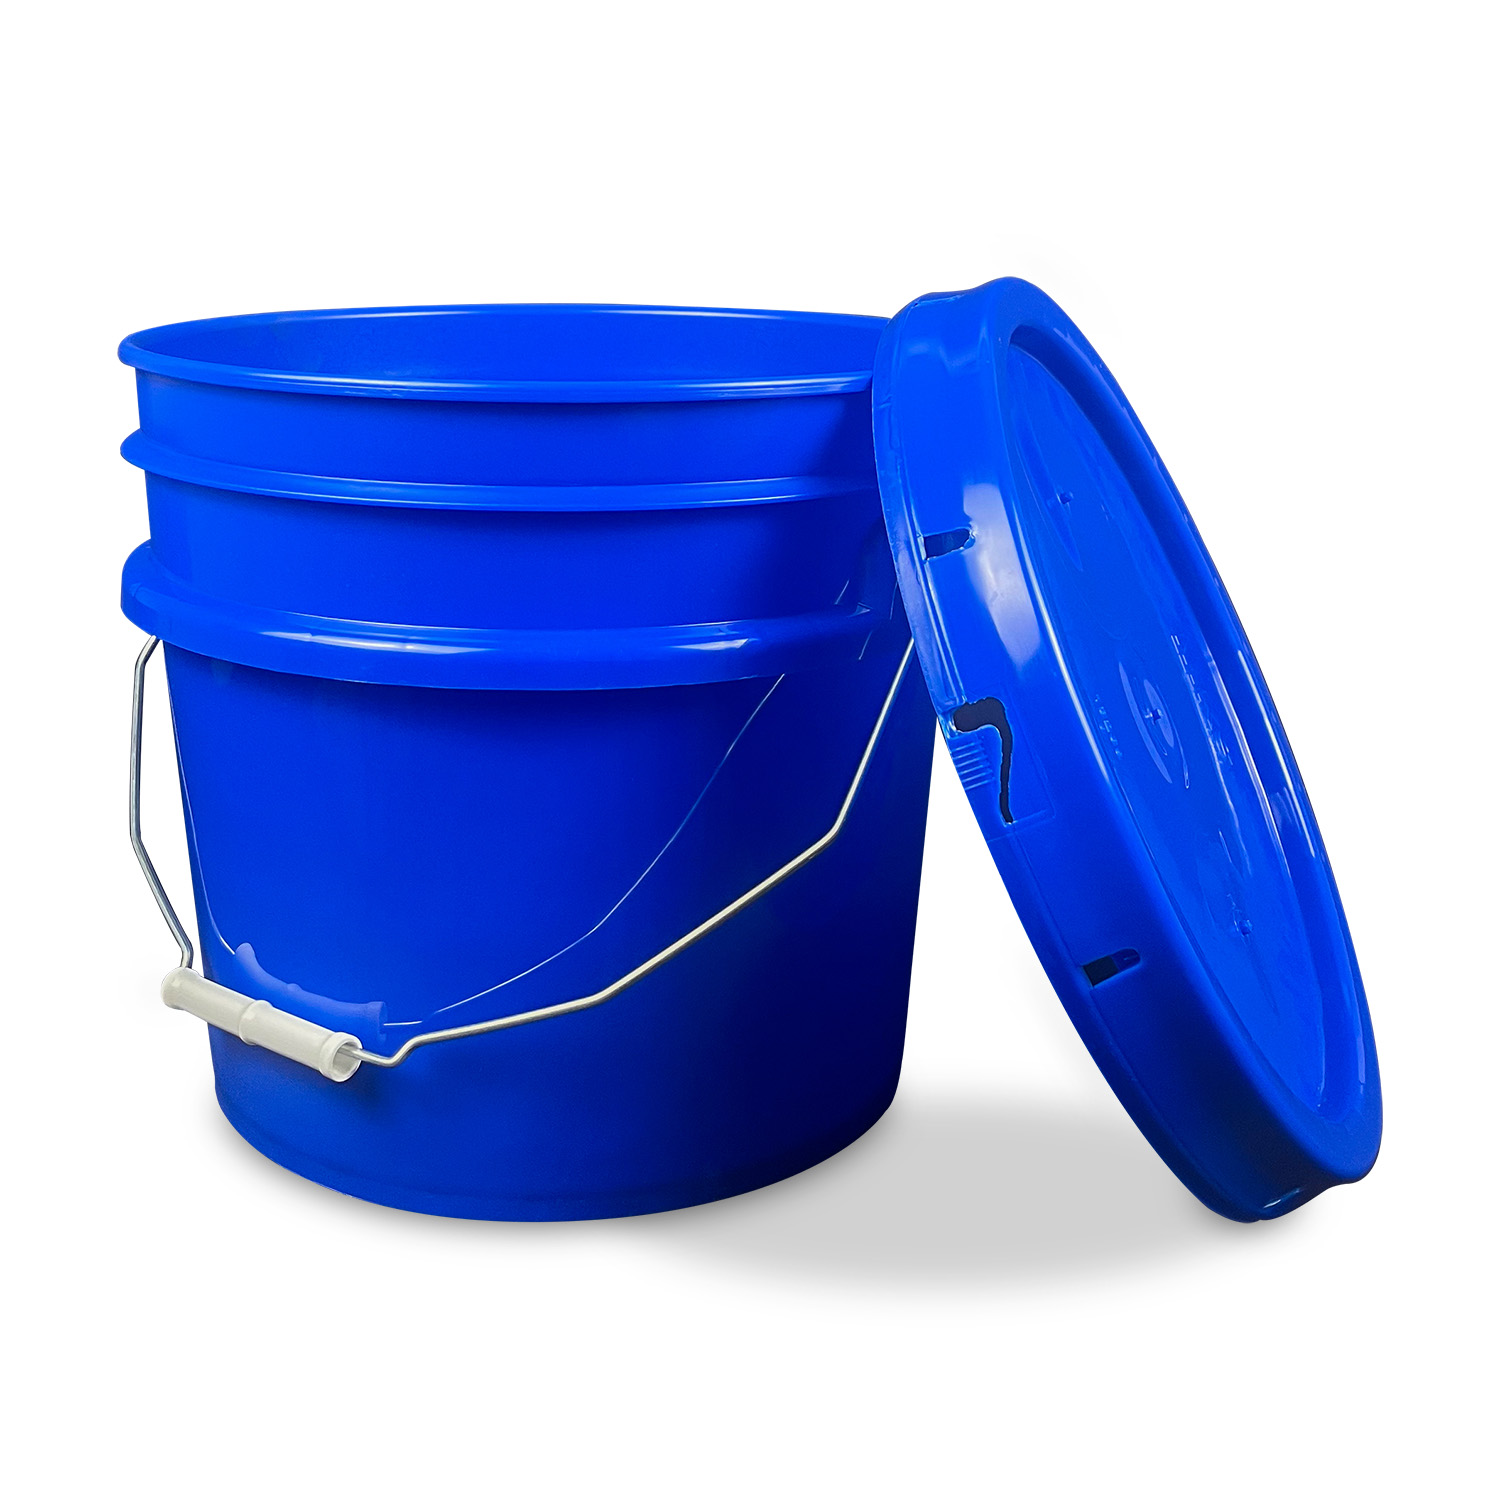 2/3 Gallon (85 oz.) BPA Free Food Grade Round Bucket with Lid